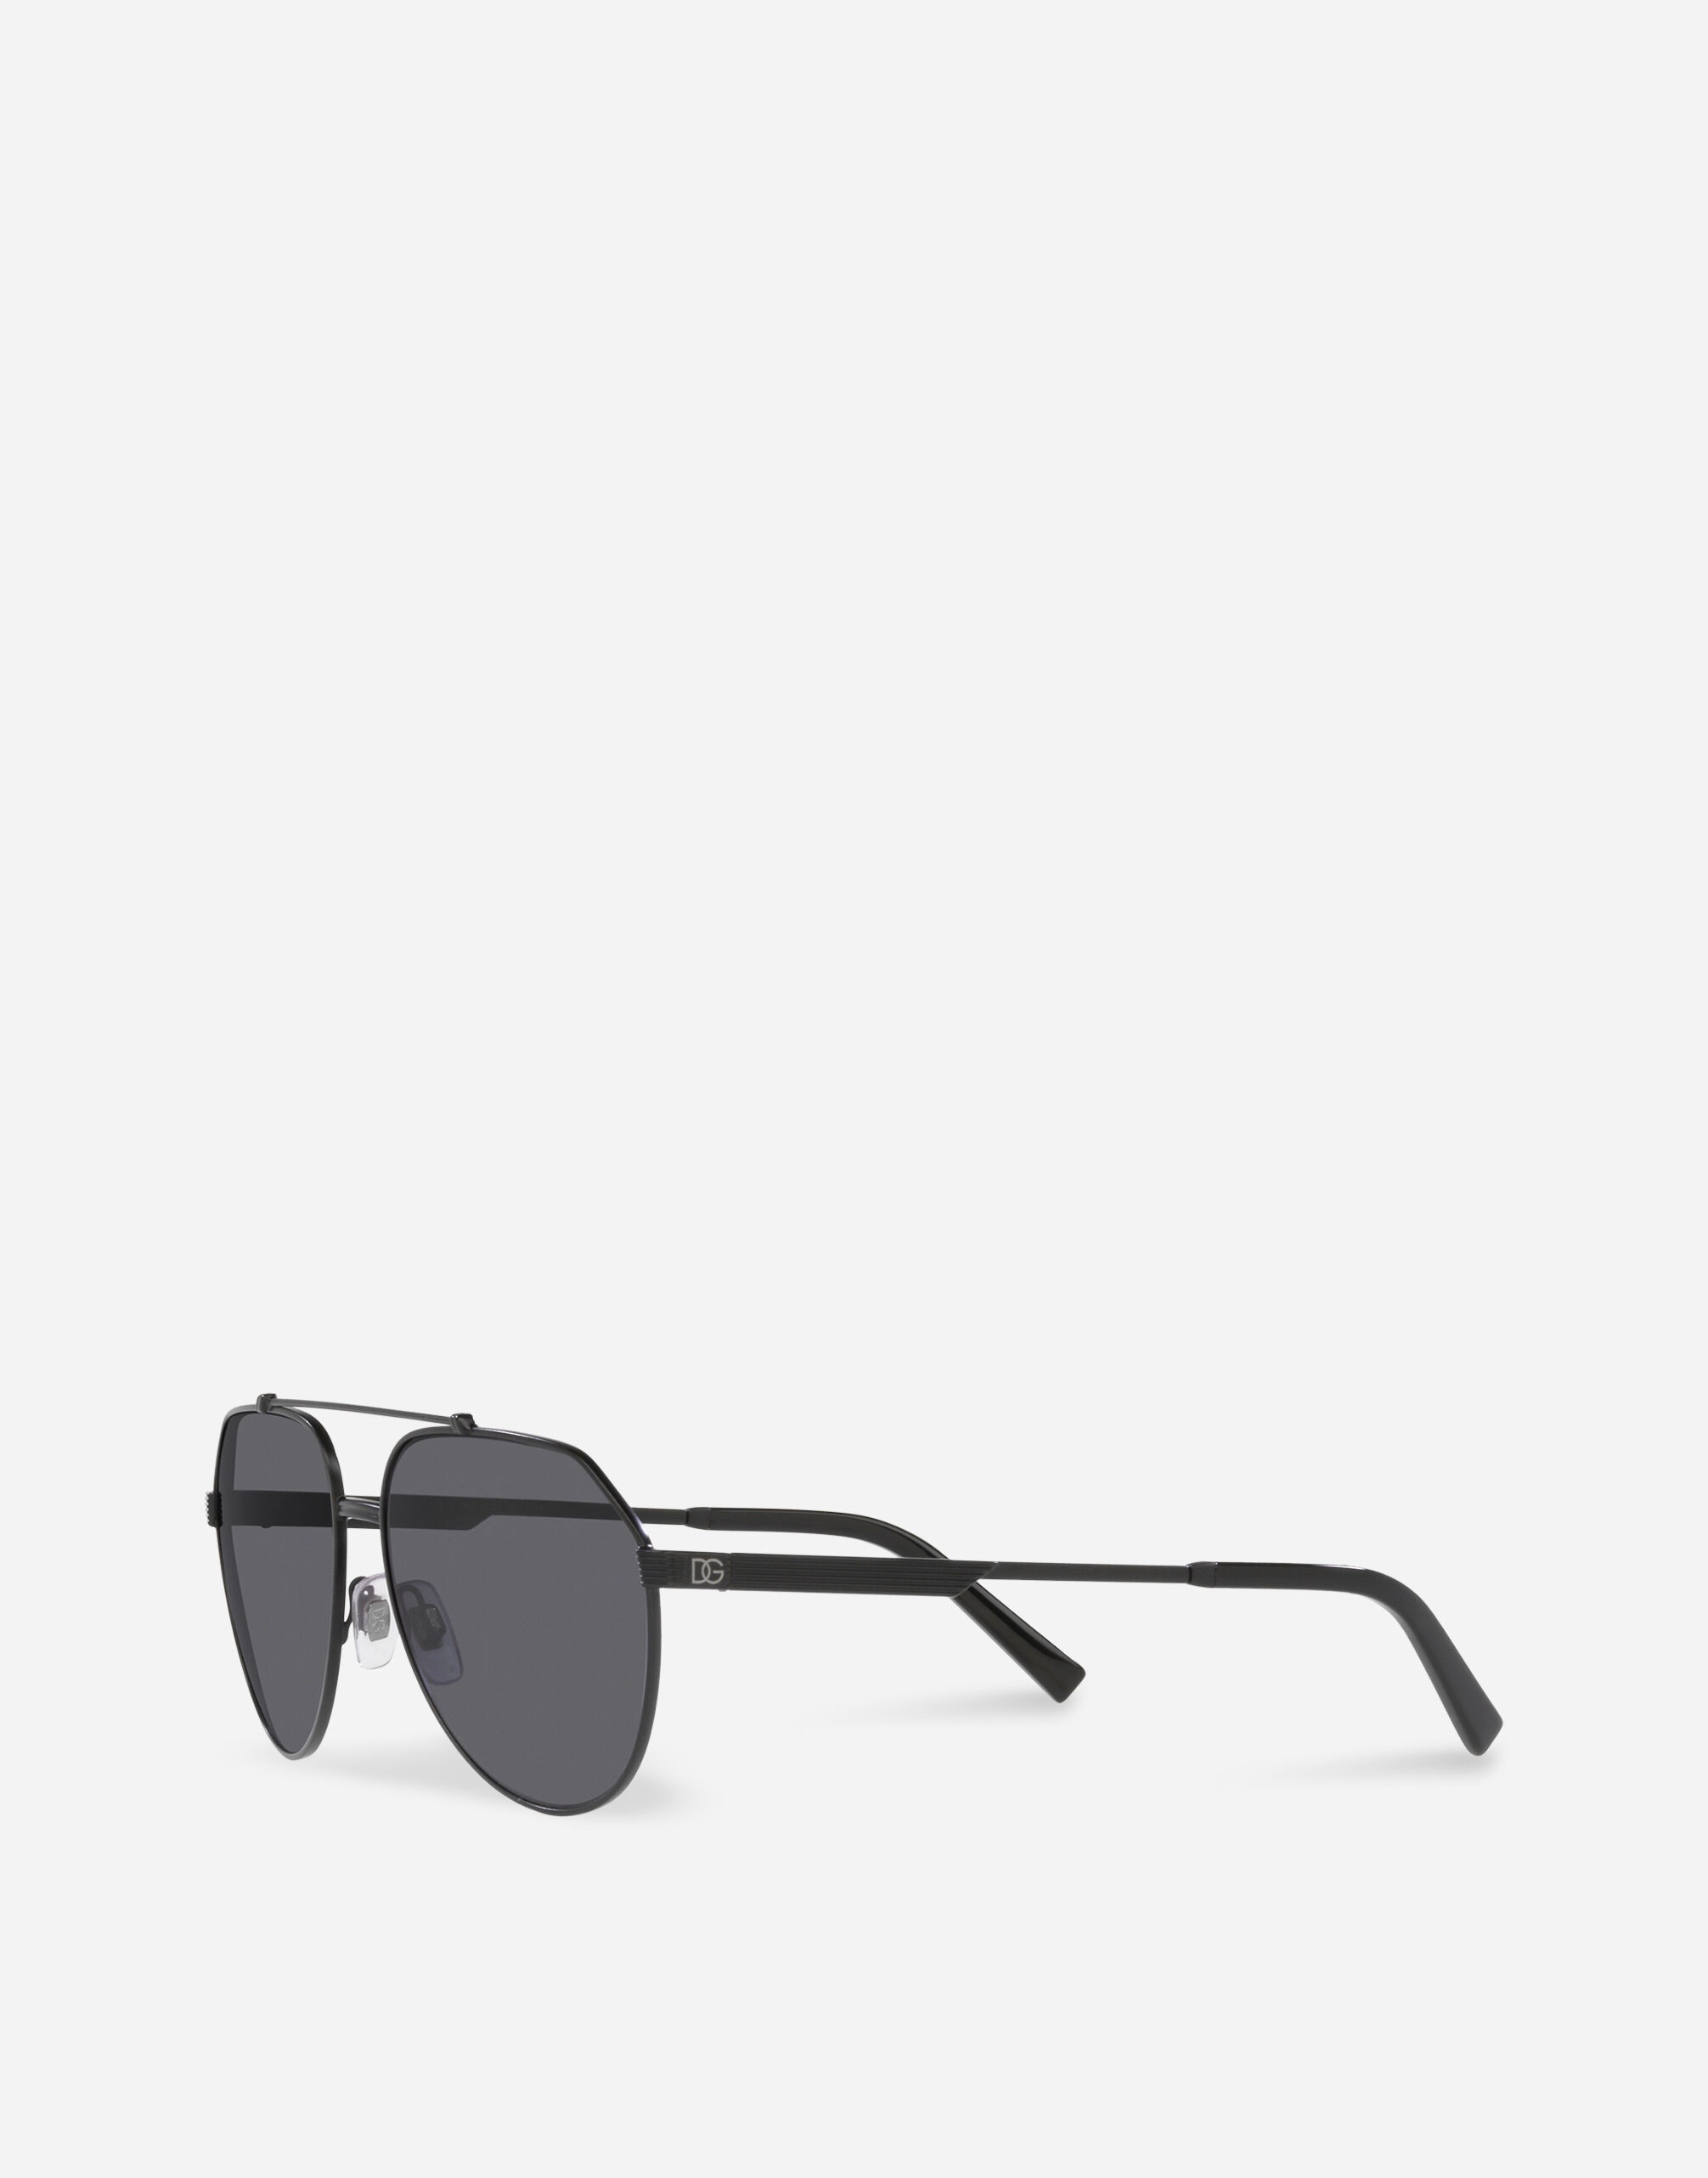 Gros grain sunglasses - 2